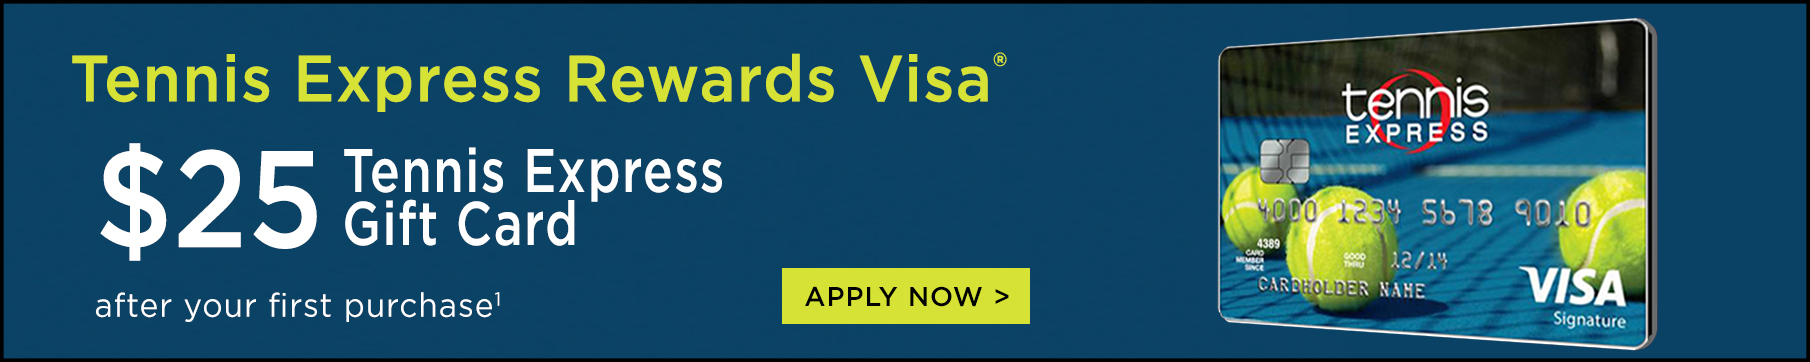 tennis express visa card